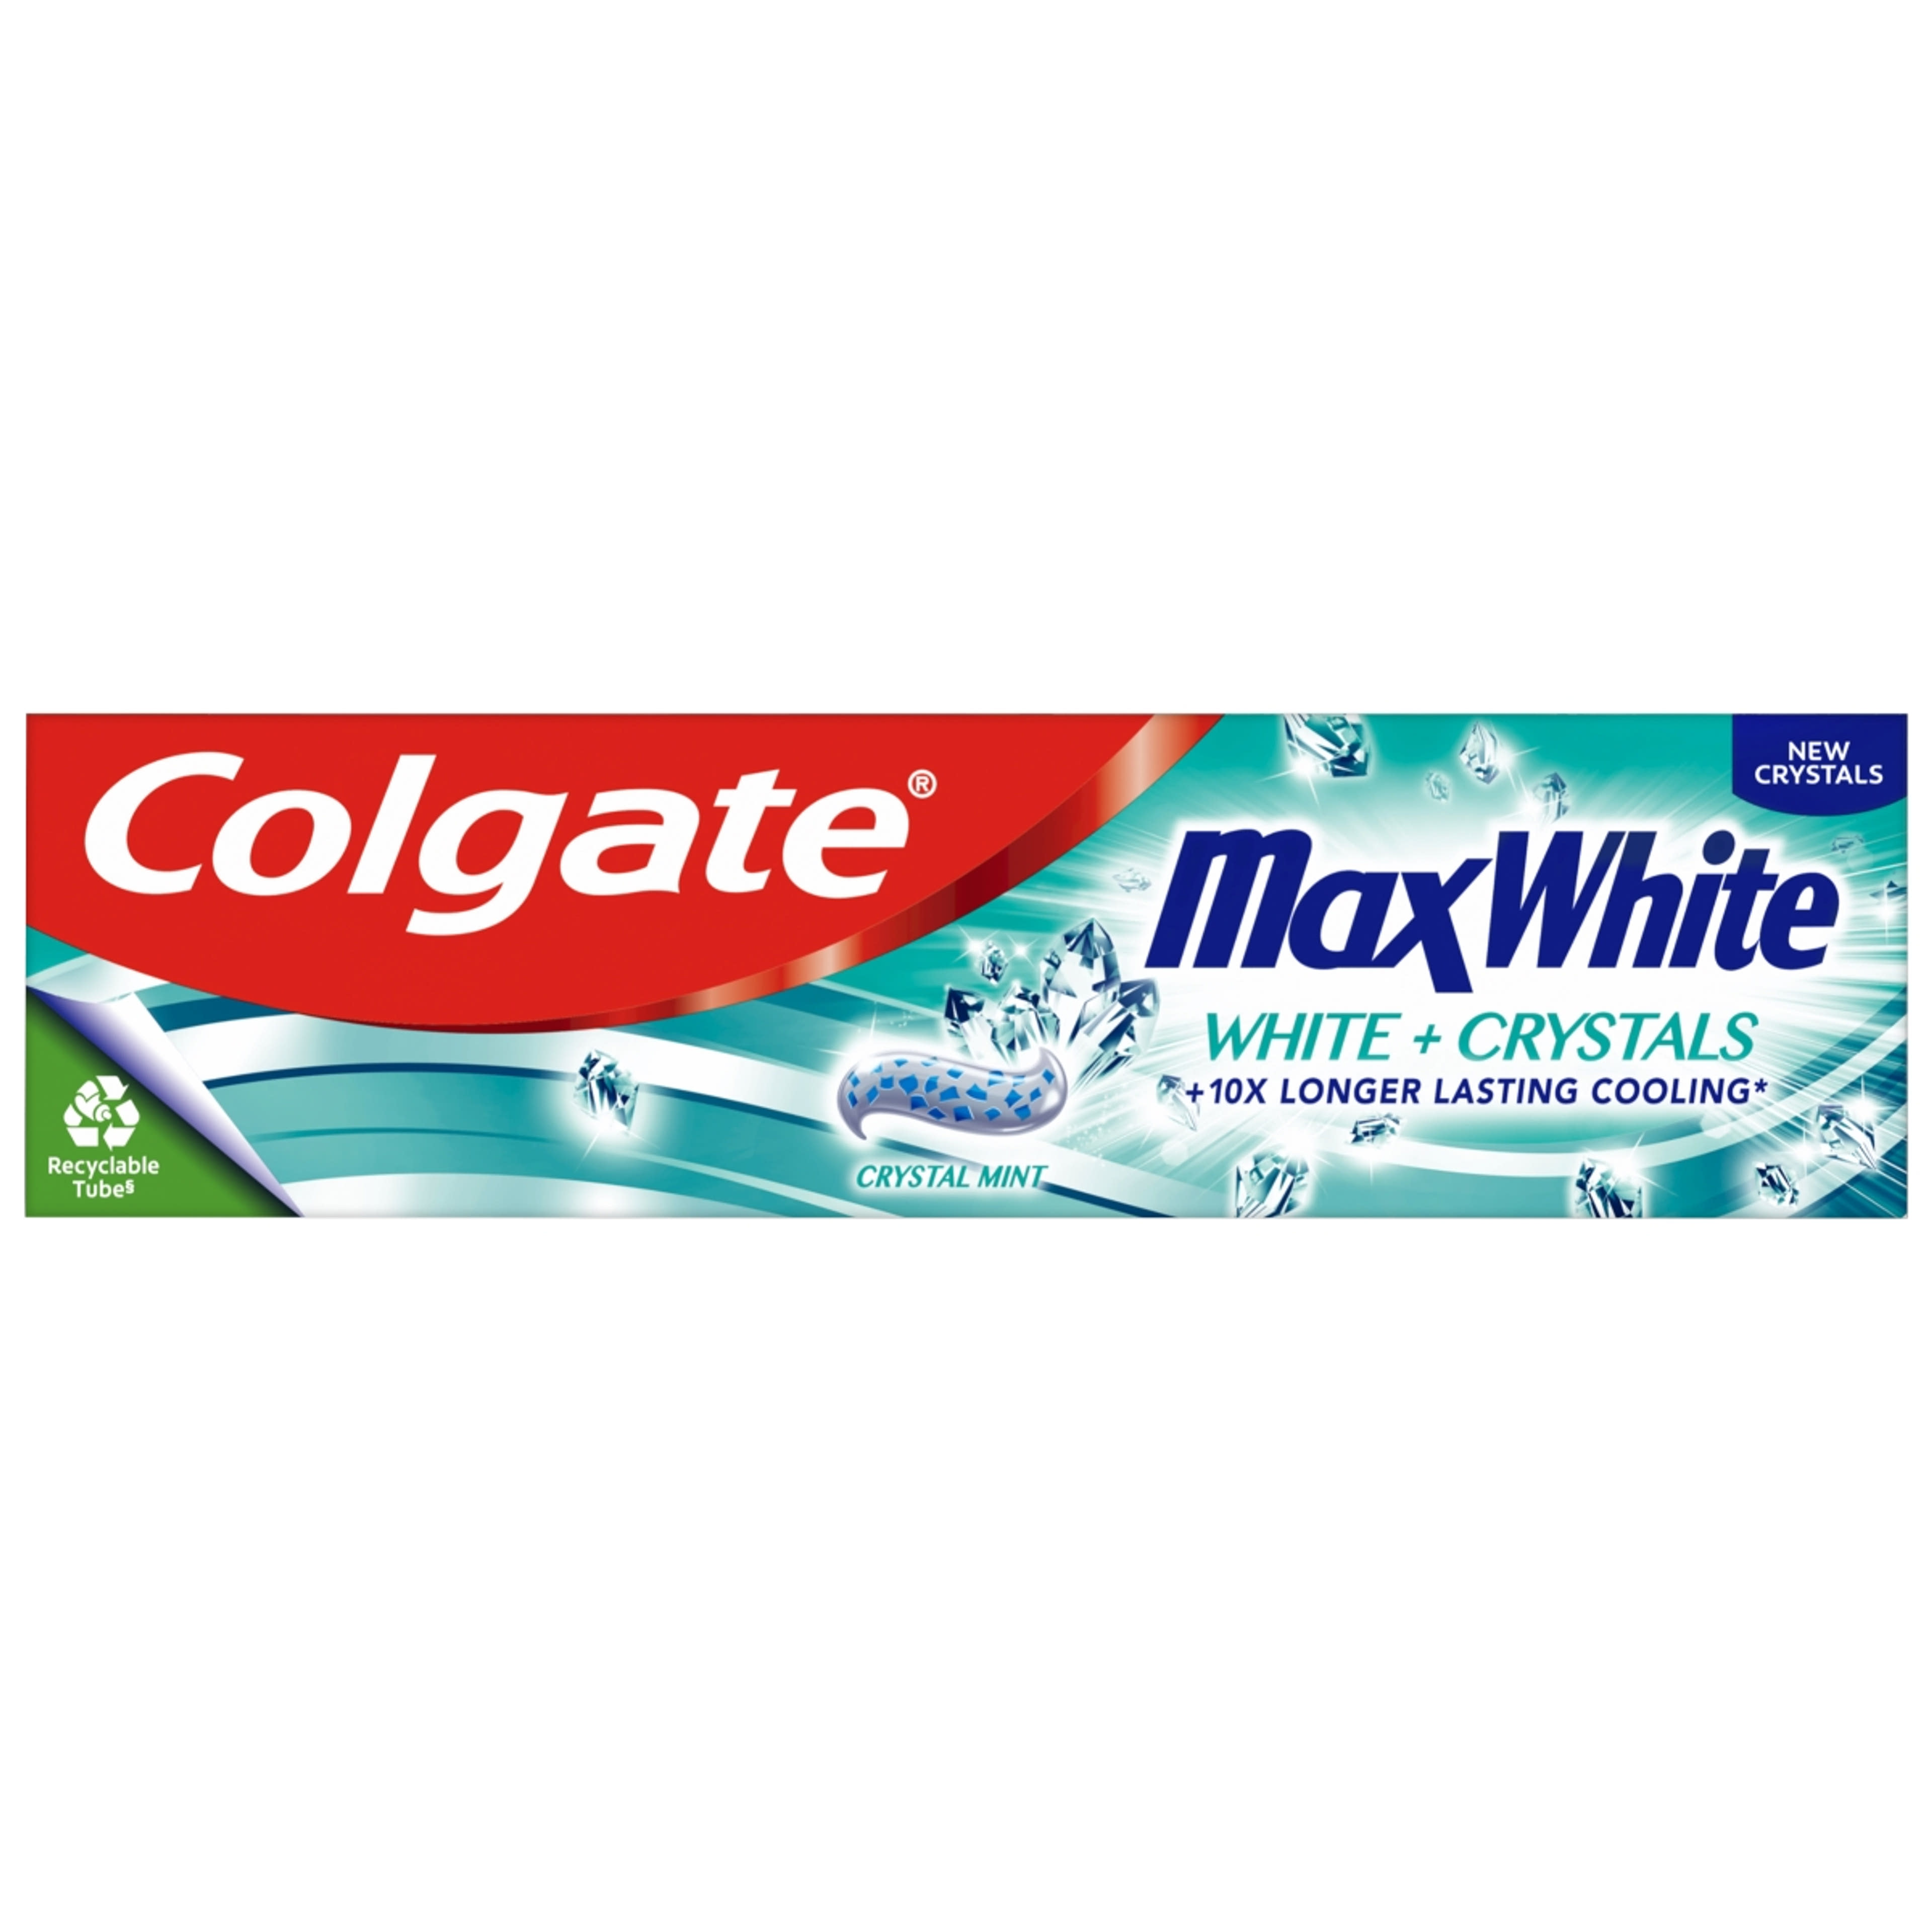 Colgate Max White White Crystals fogfehérítő fogkrém - 75 ml